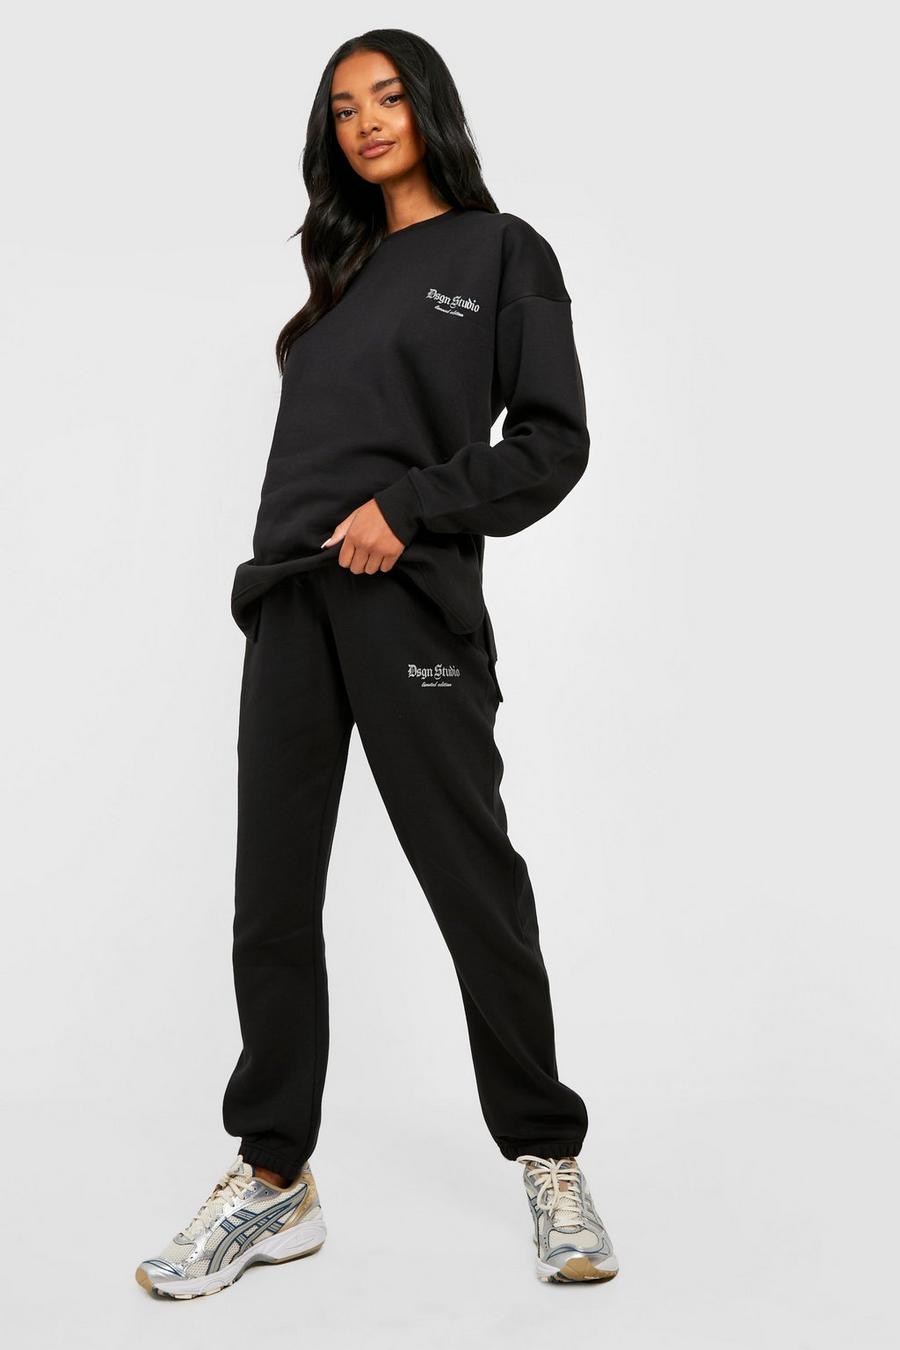 Pantalón deportivo Premamá oversize con estampado Dsgn Studio reflectante, Black nero